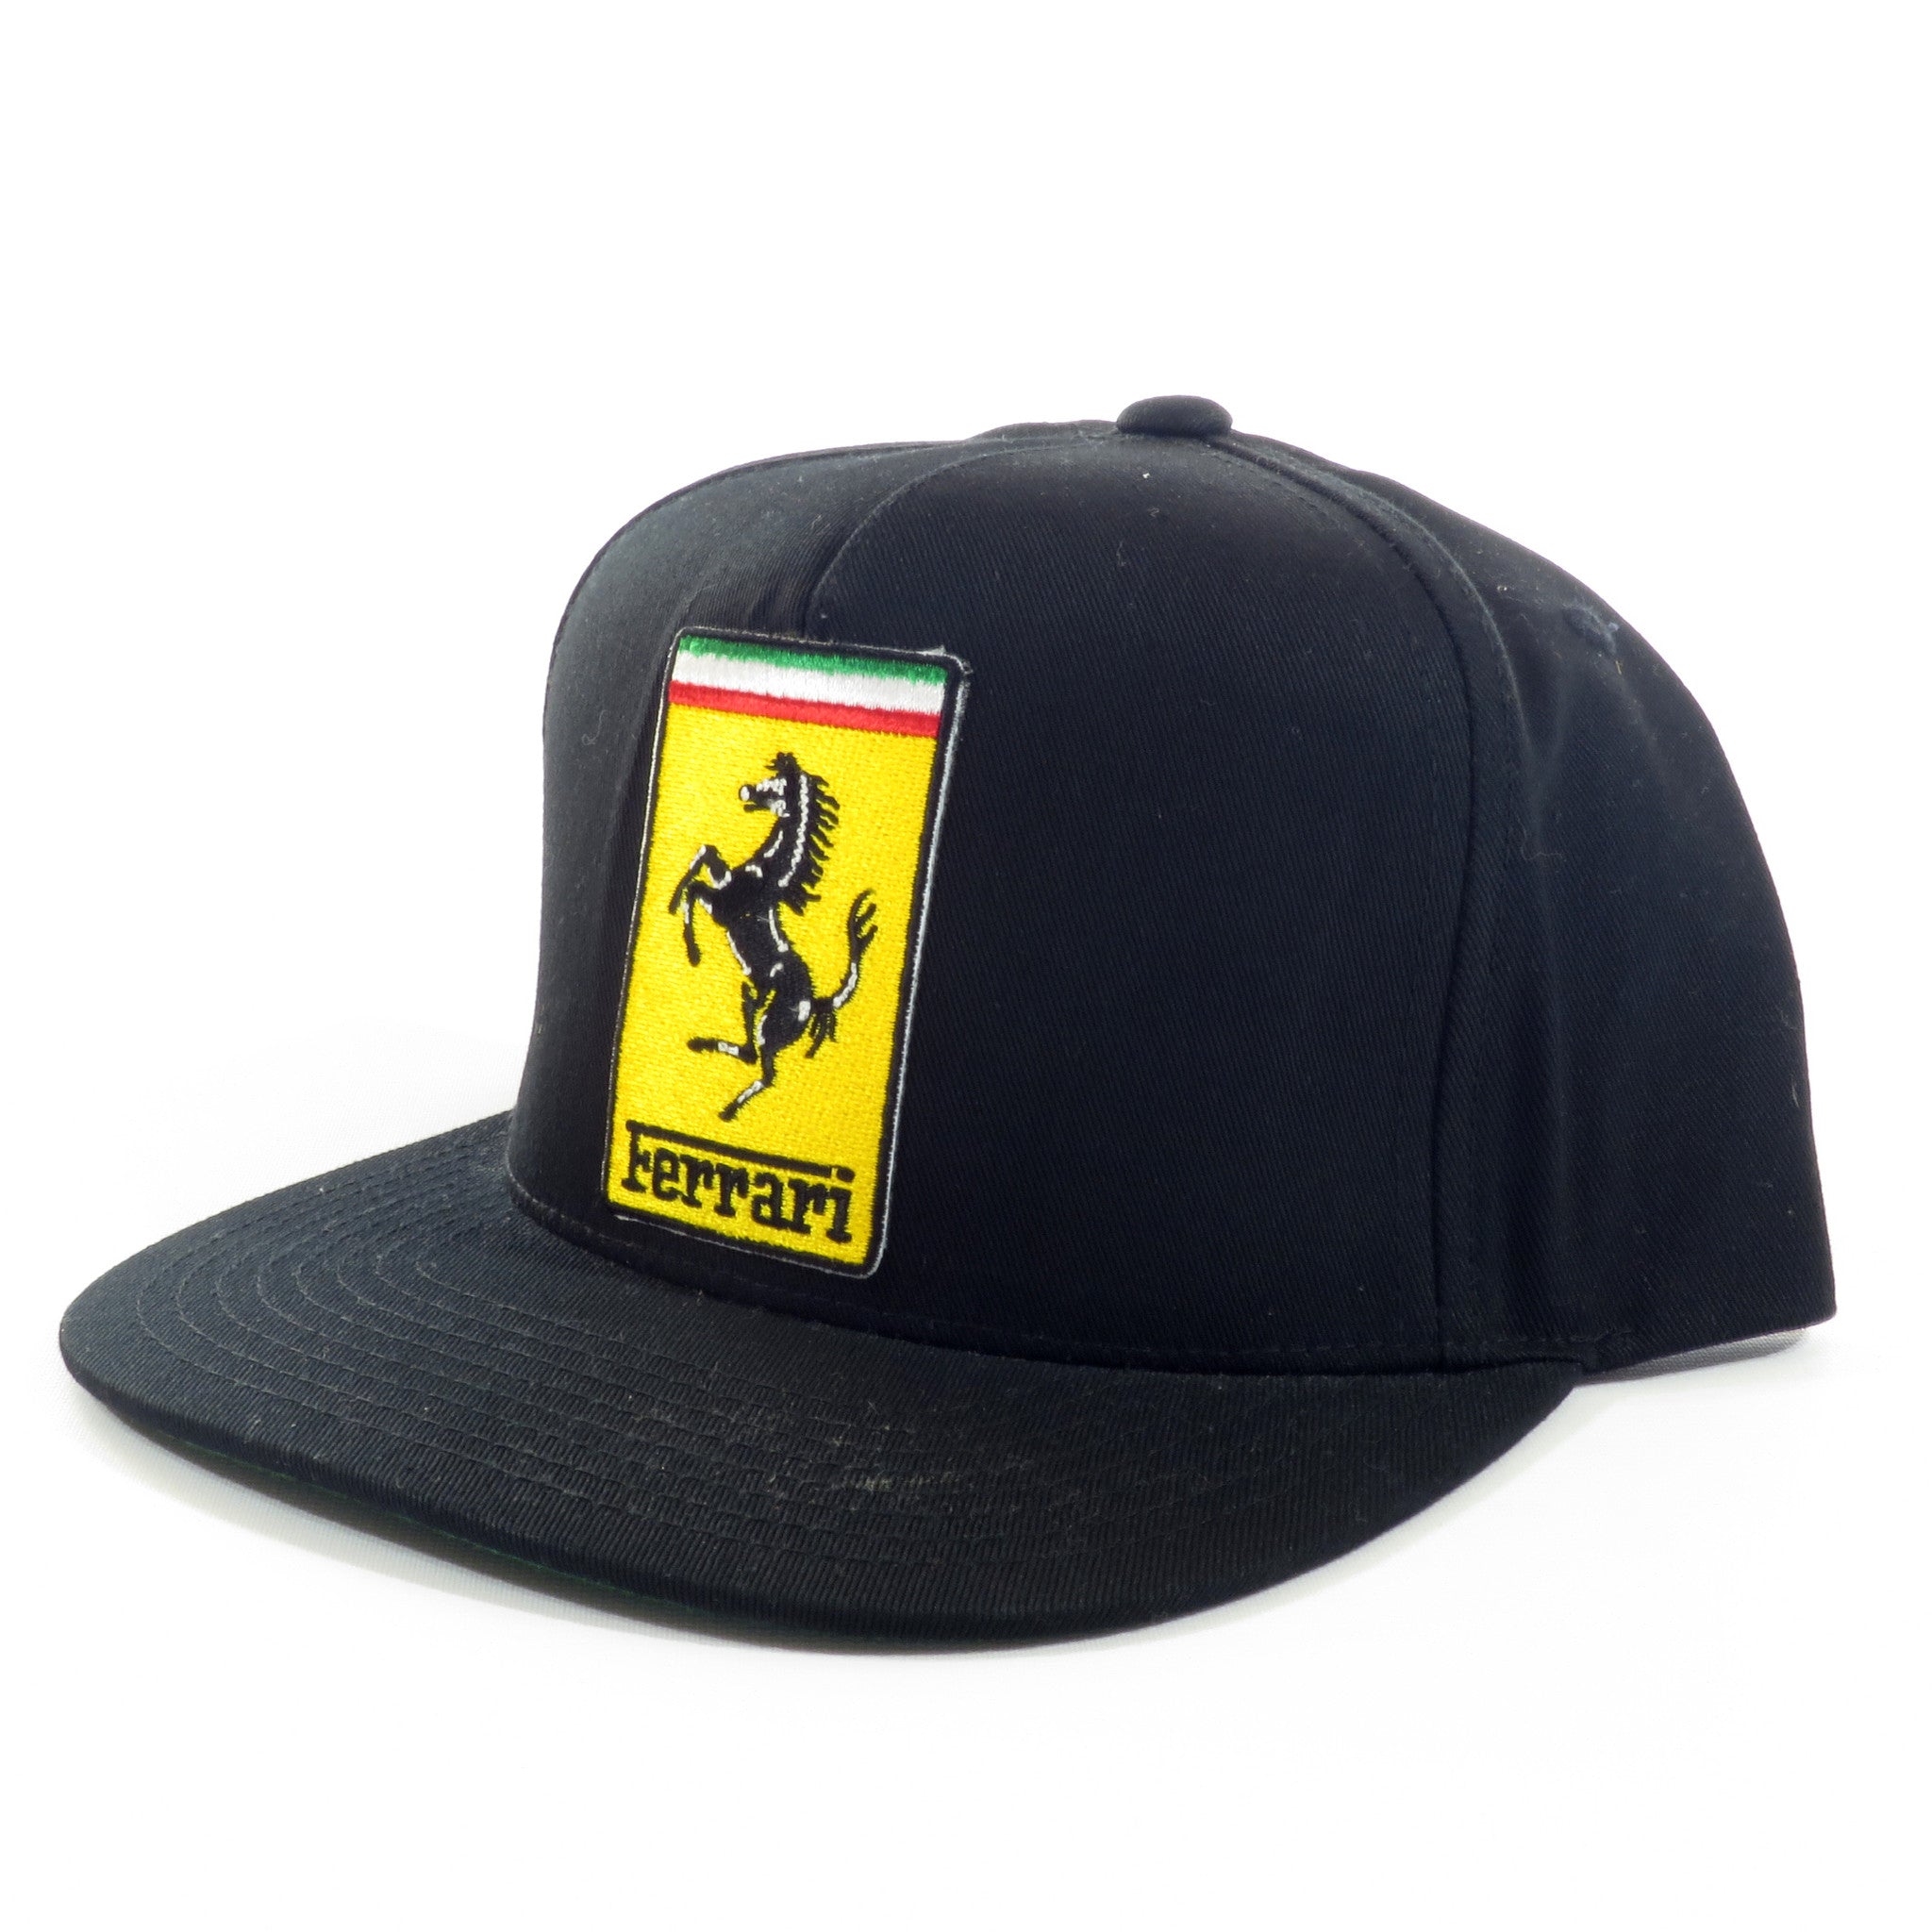 Ferrari Snapback Hat